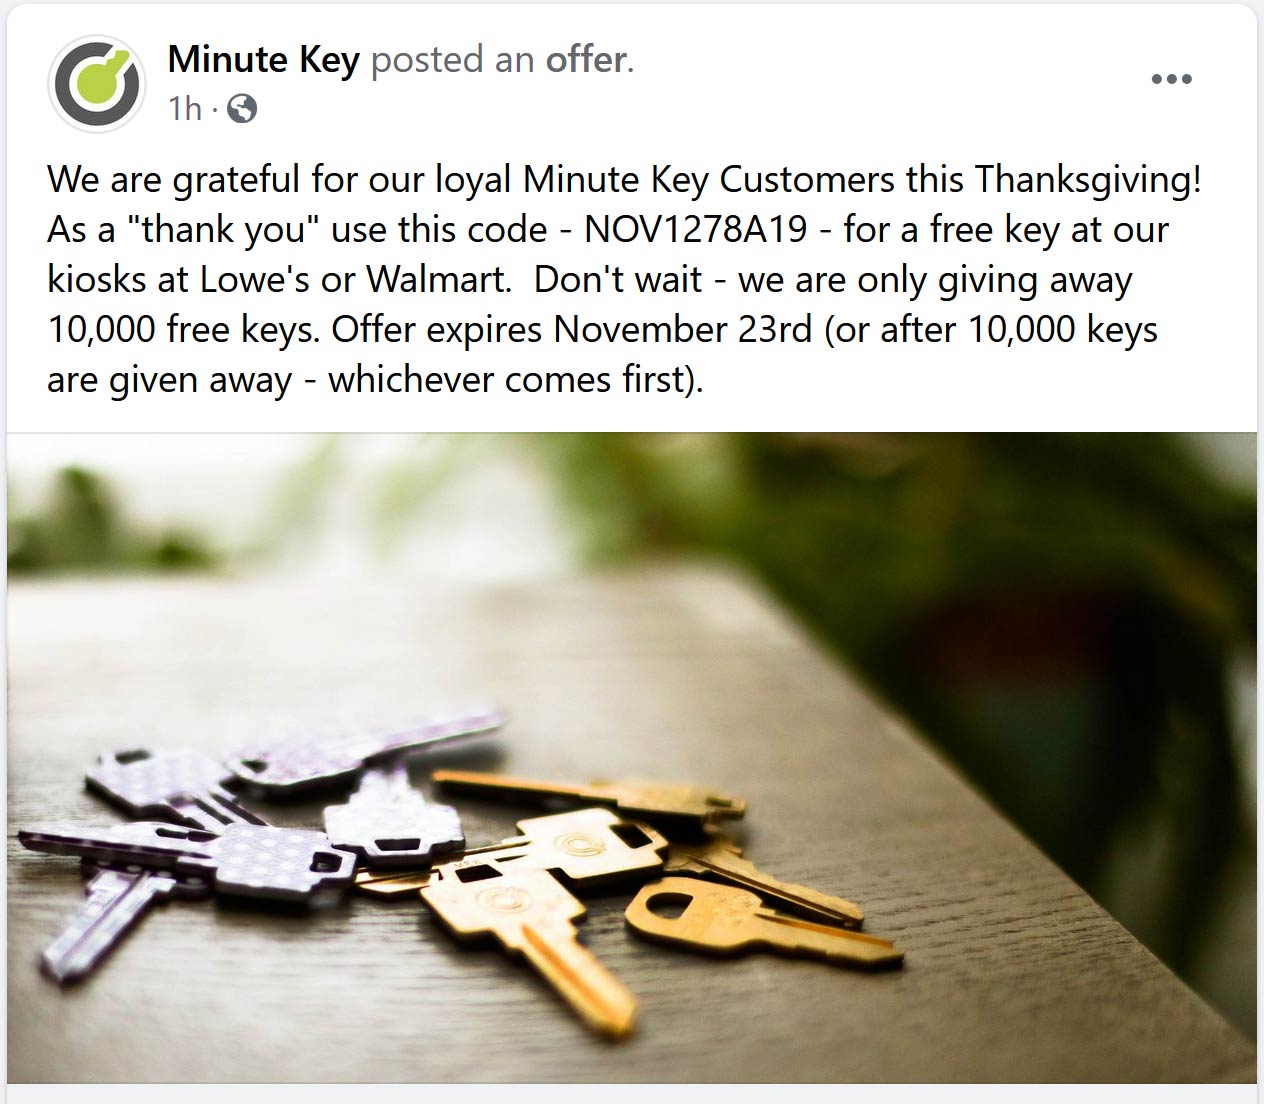 Minute Key stores Coupon  Free key at various Minute Key kiosks via promo code NOV1278A19 #minutekey 